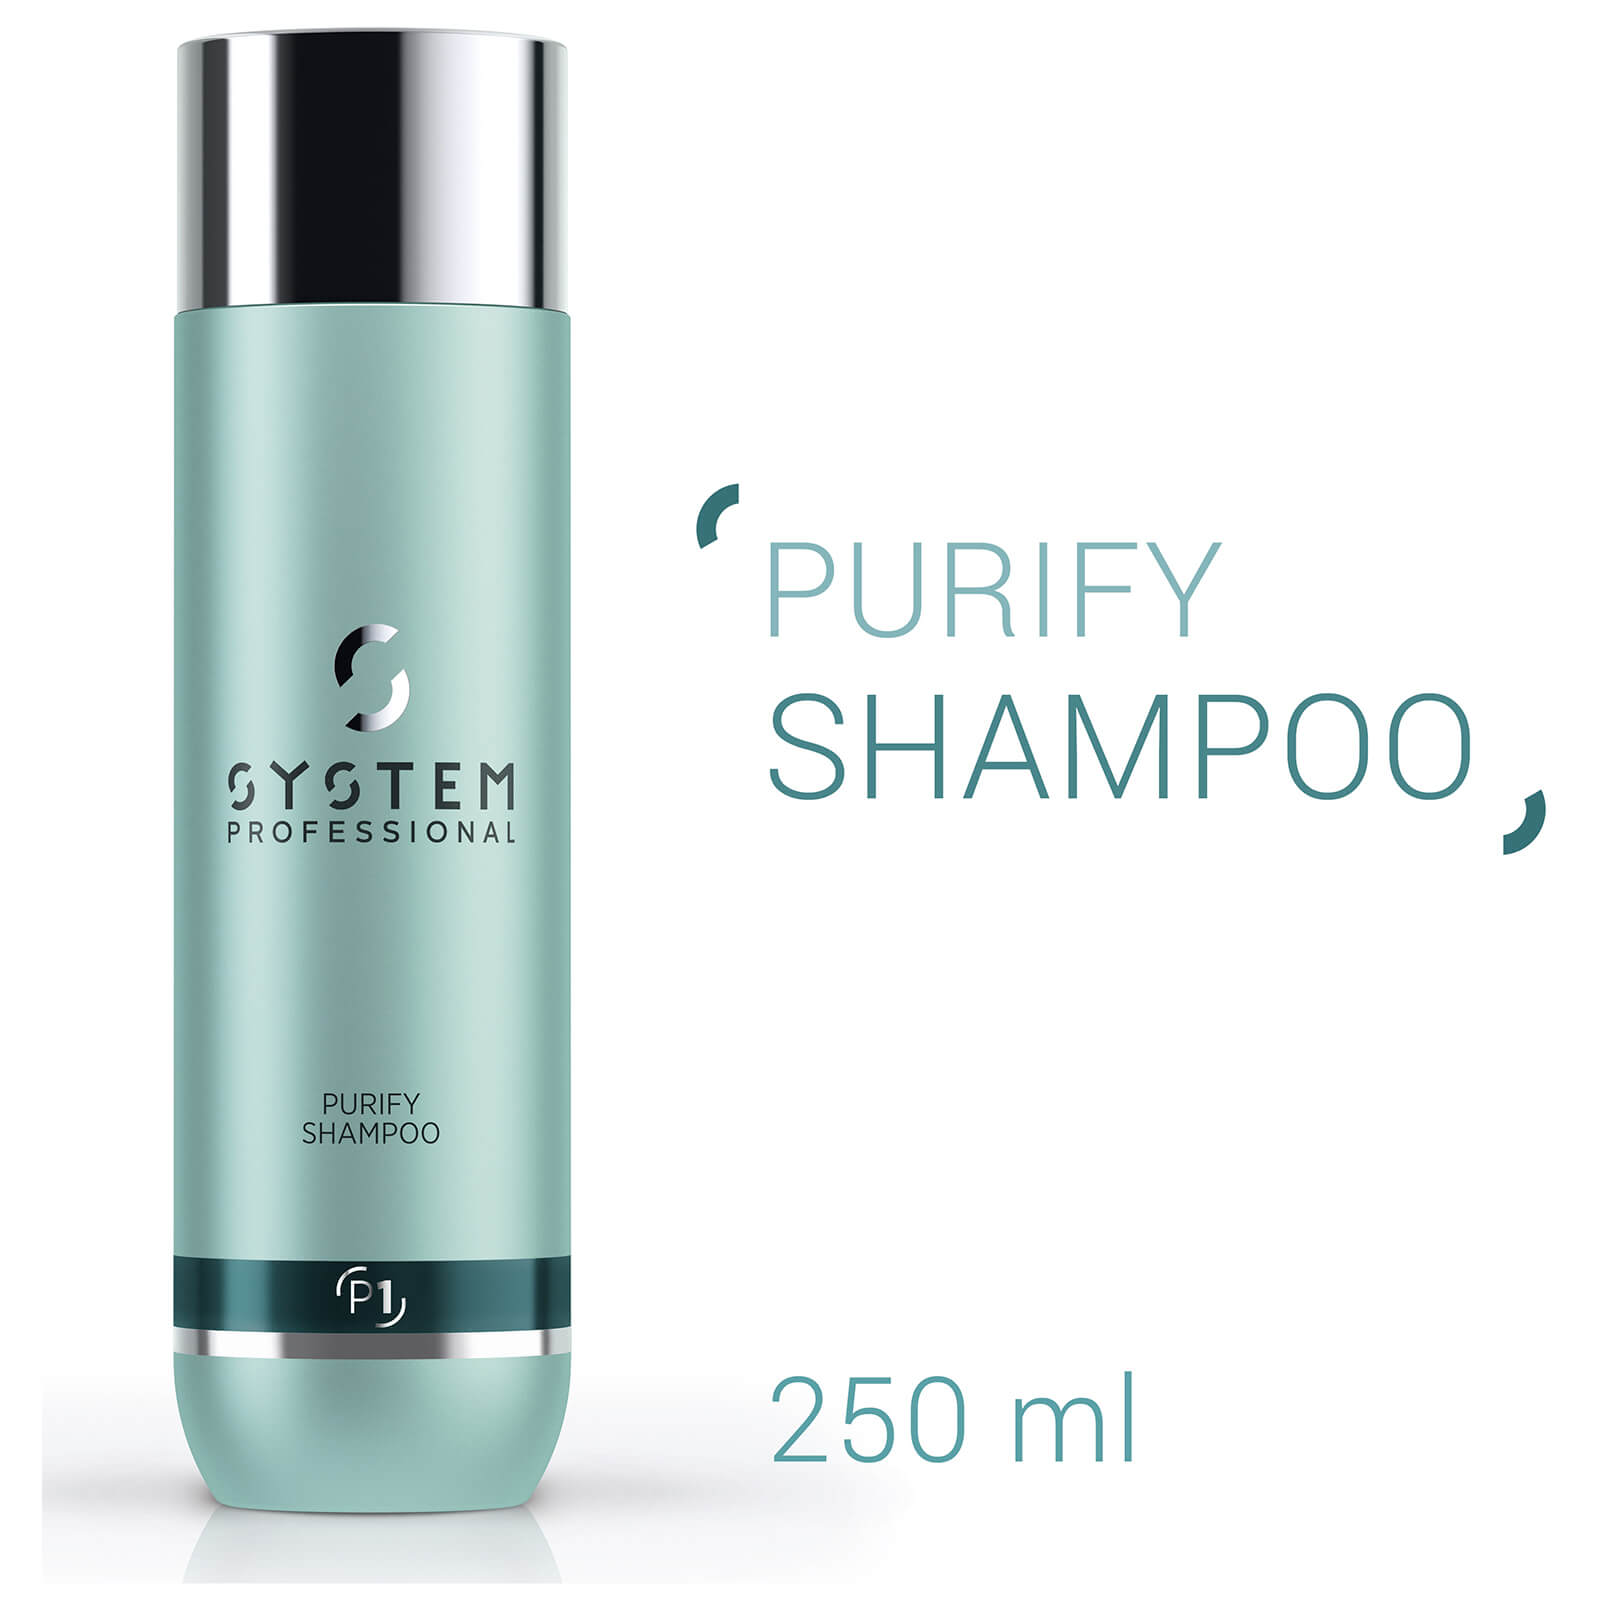 System Professional Purify Shampoo 250ml